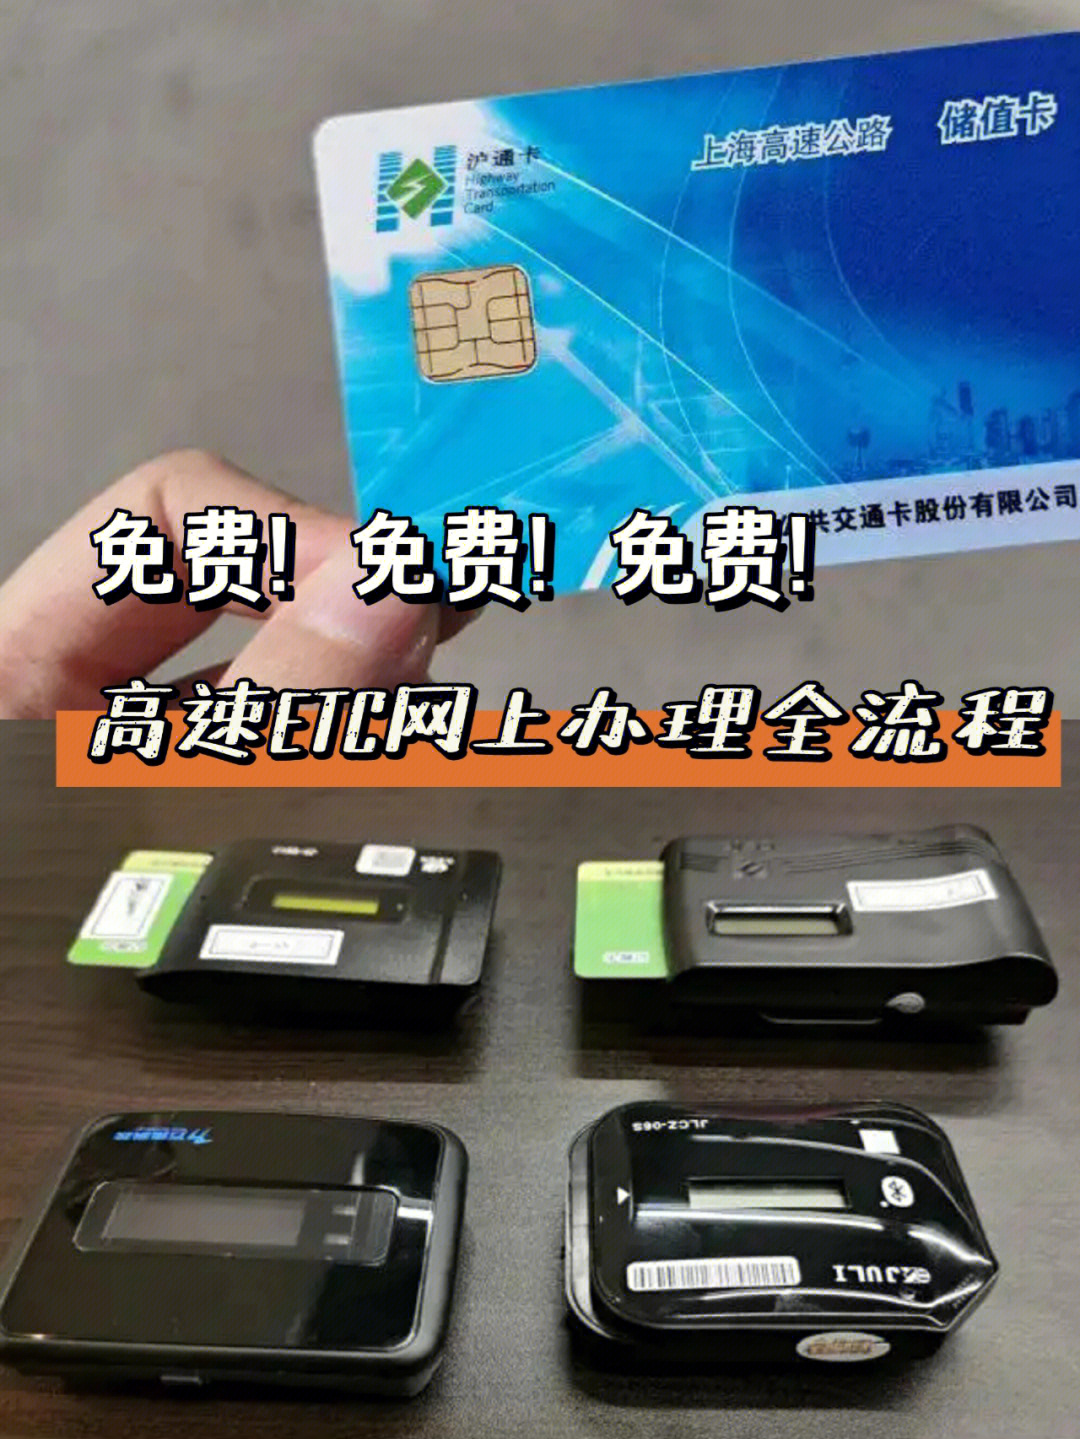 etc有两种办法989815下载上海交通卡app,点击首页的etc服务